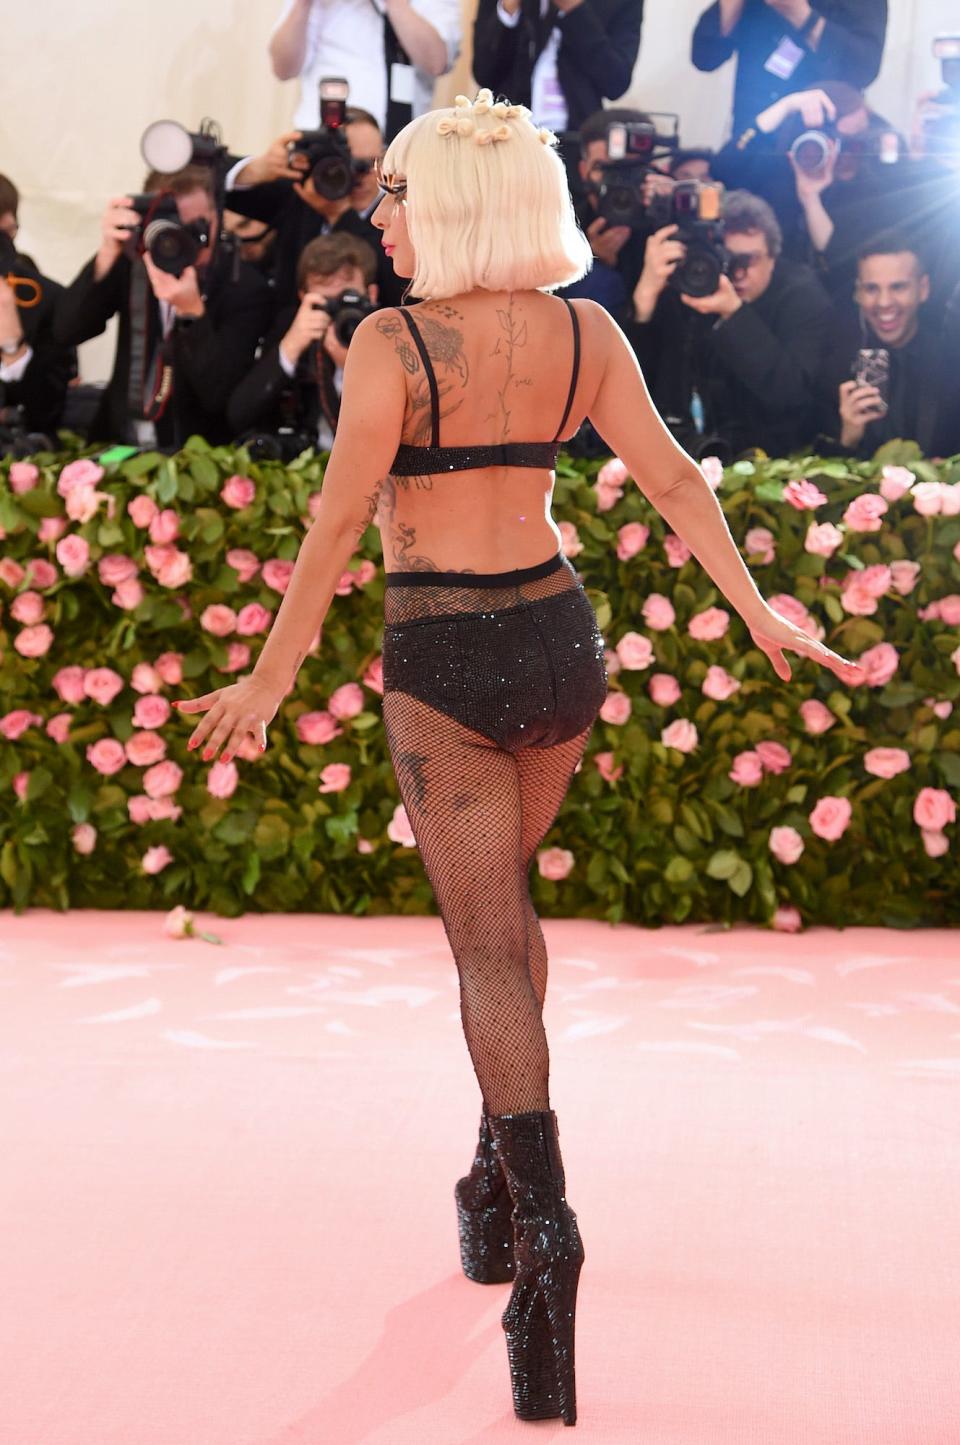 Lady Gaga at the 2019 Met Gala in New York City.